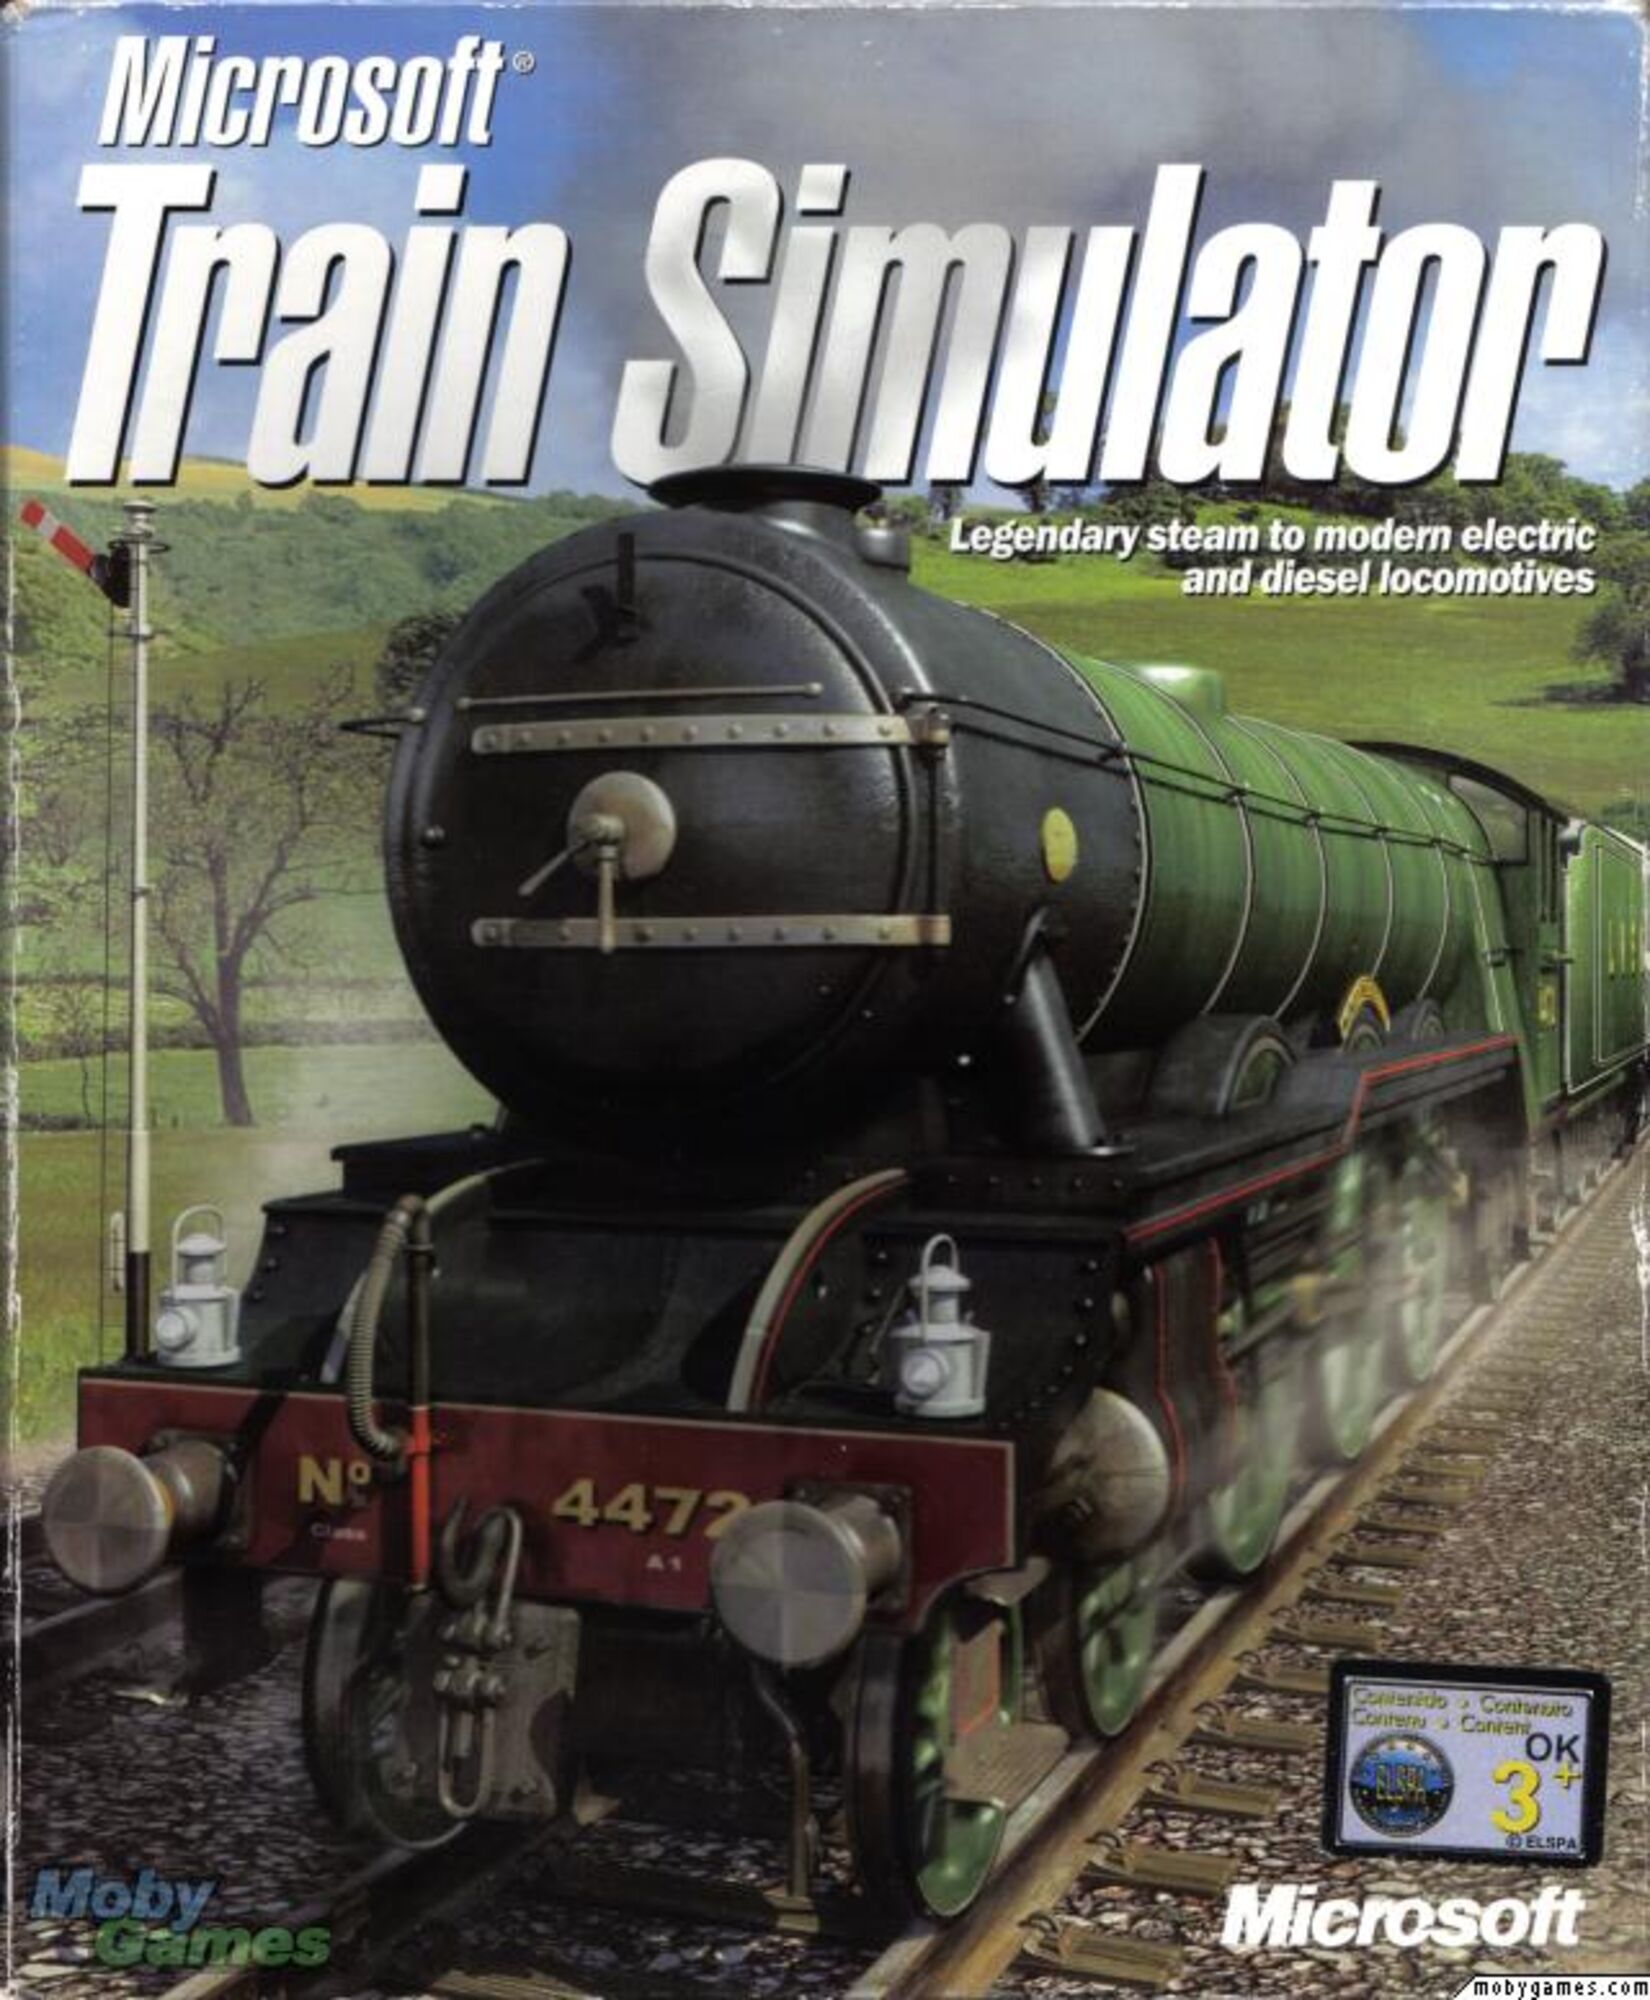 microsoft train simulator 2012 download